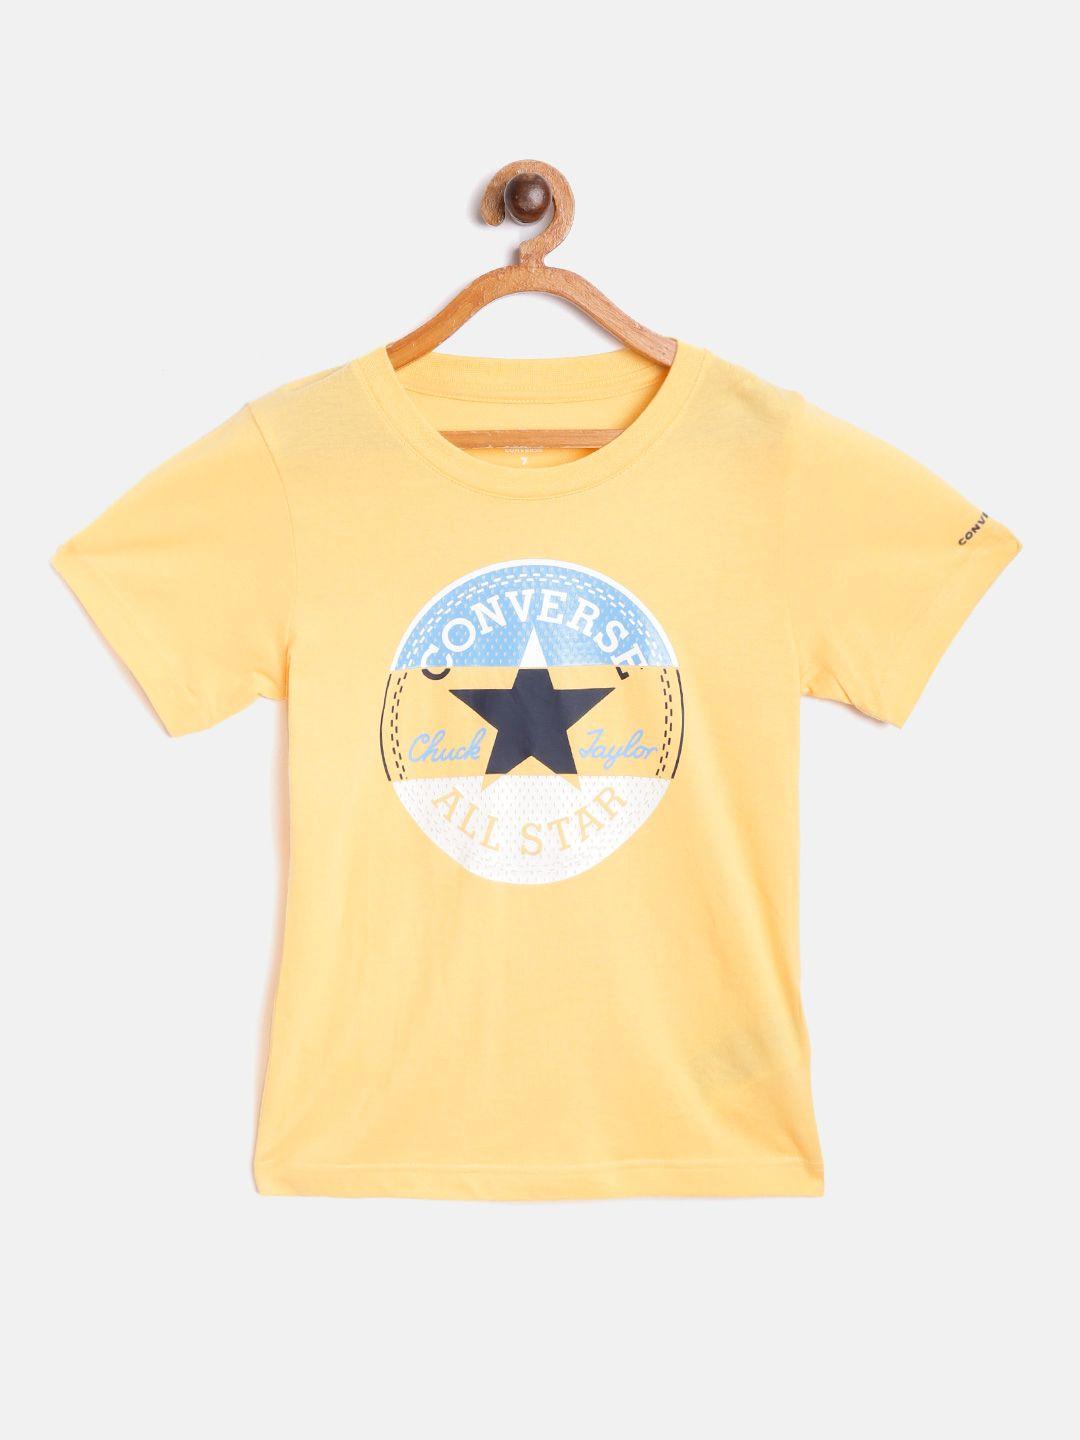 converse-boys-yellow--blue-pure-cotton-brand-logo-printed-round-neck-pure-cotton-t-shirt